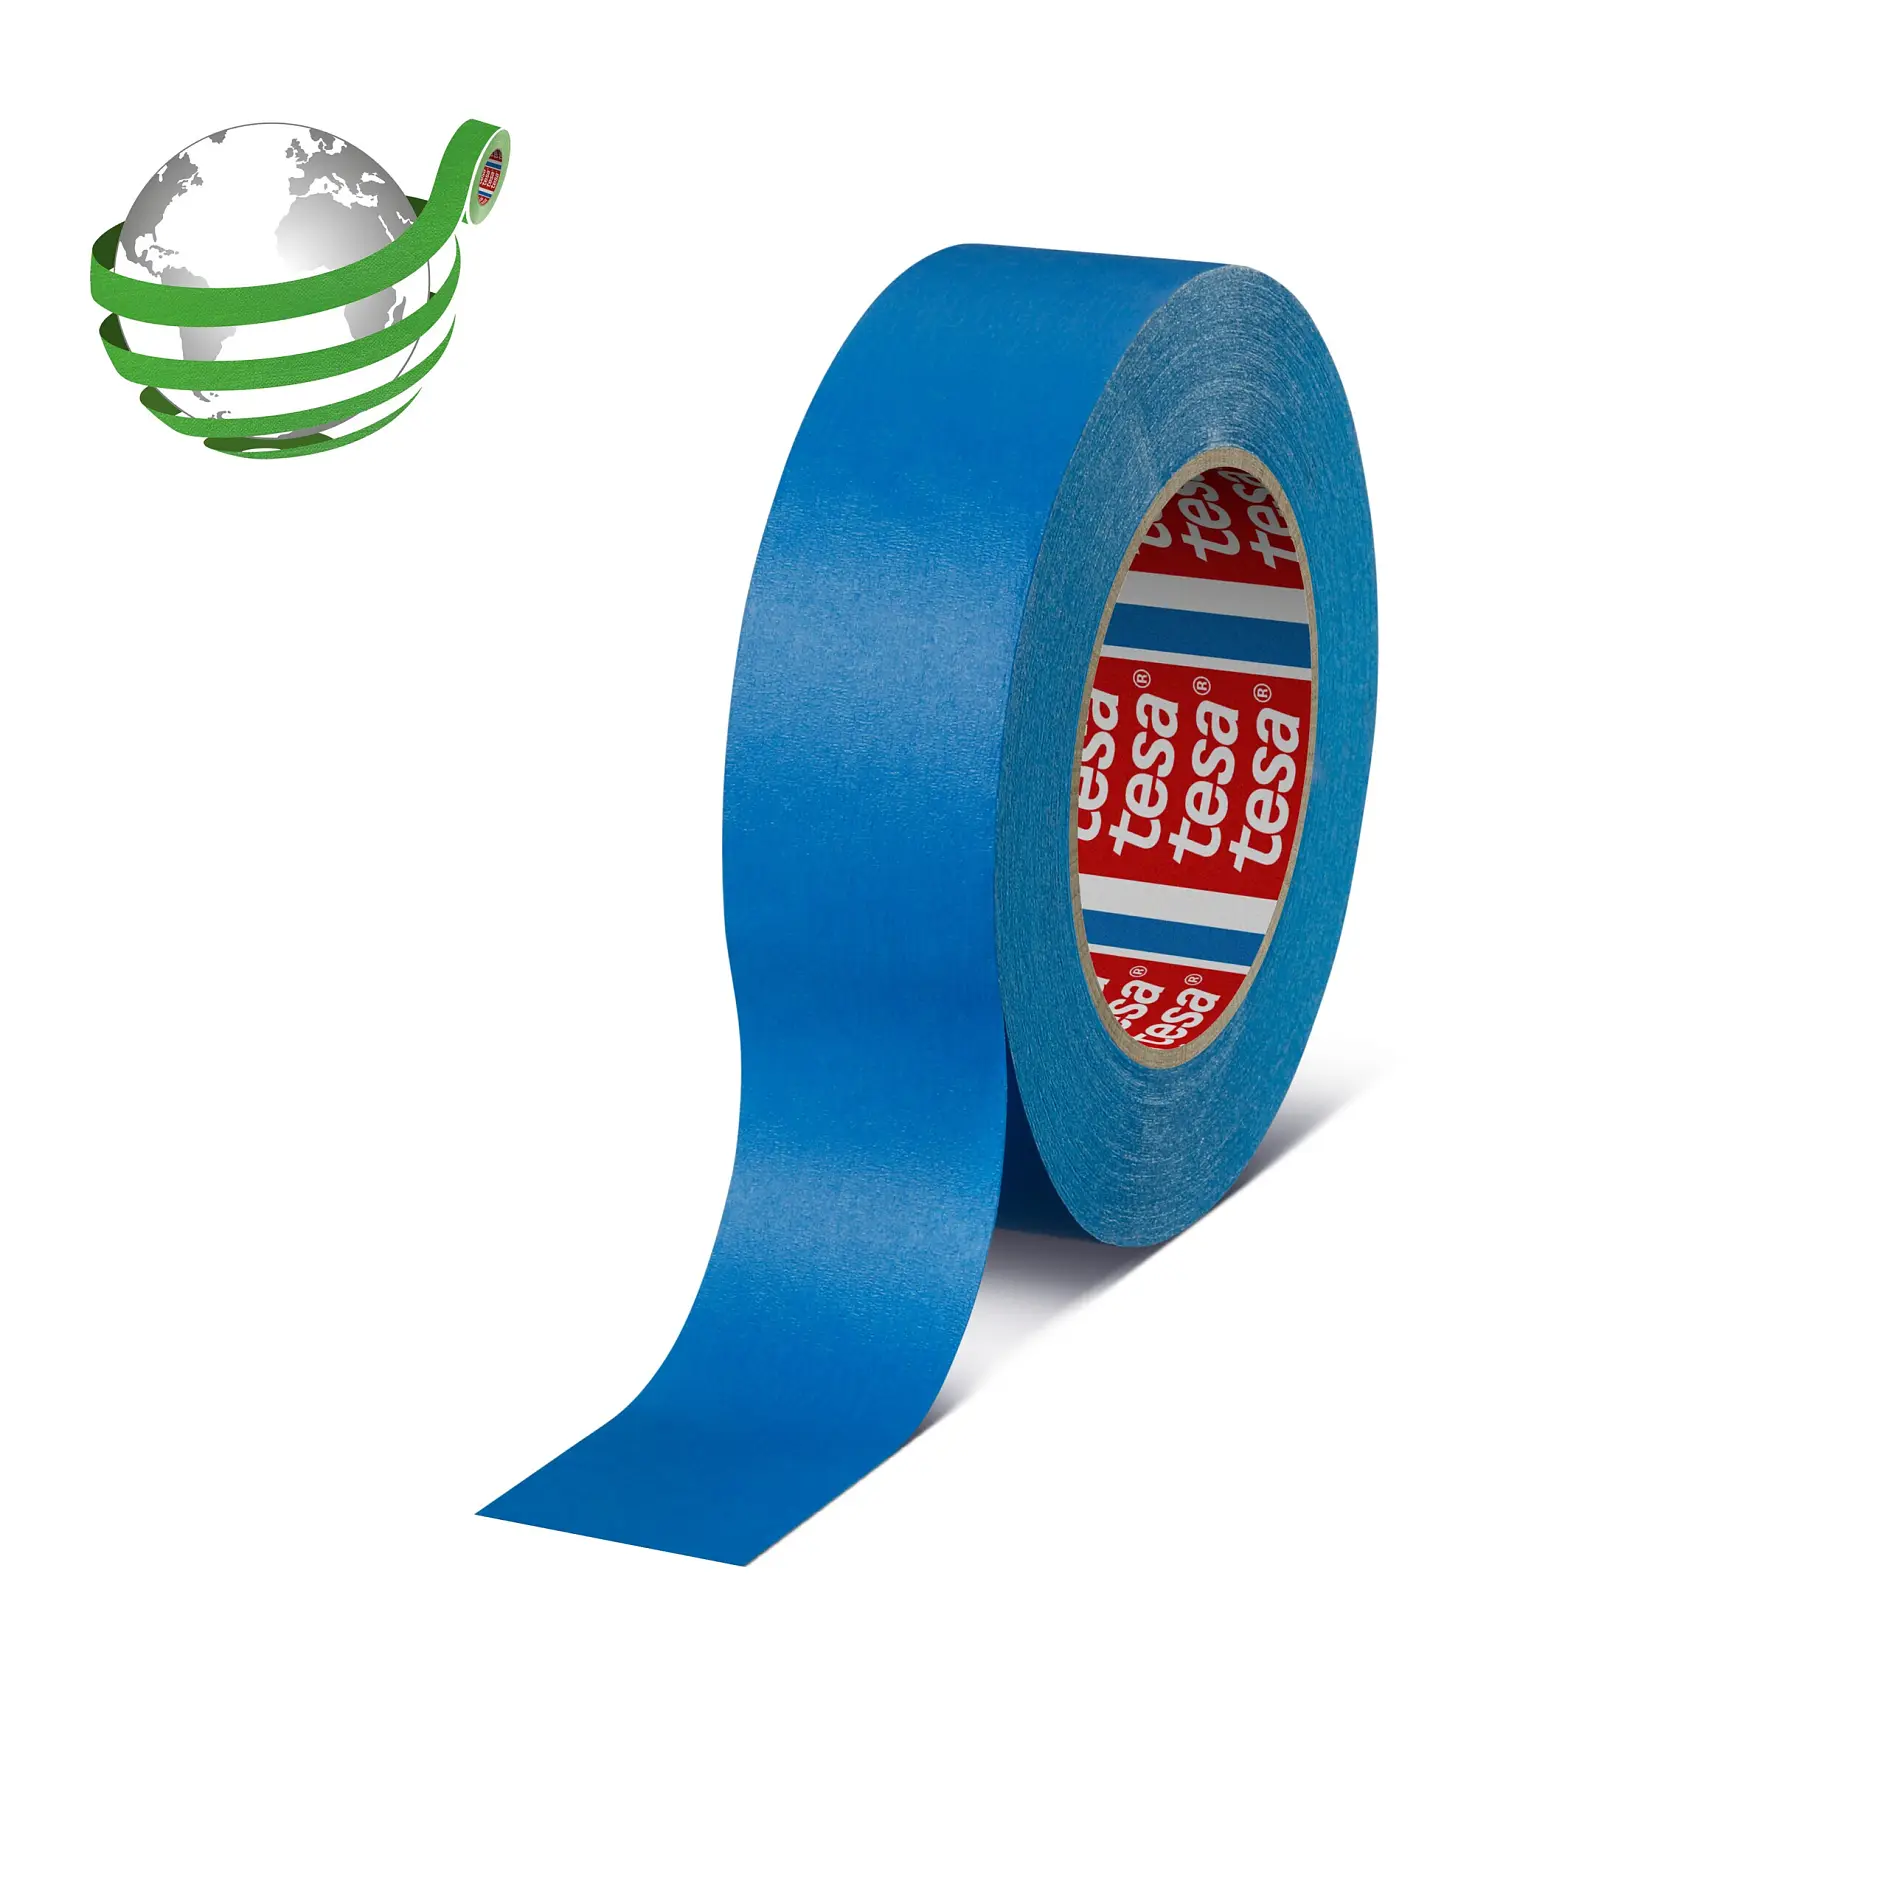 tesa-4308-masking-tape-for-high-demanding-applications-blue-043080005400-pr-with-marker